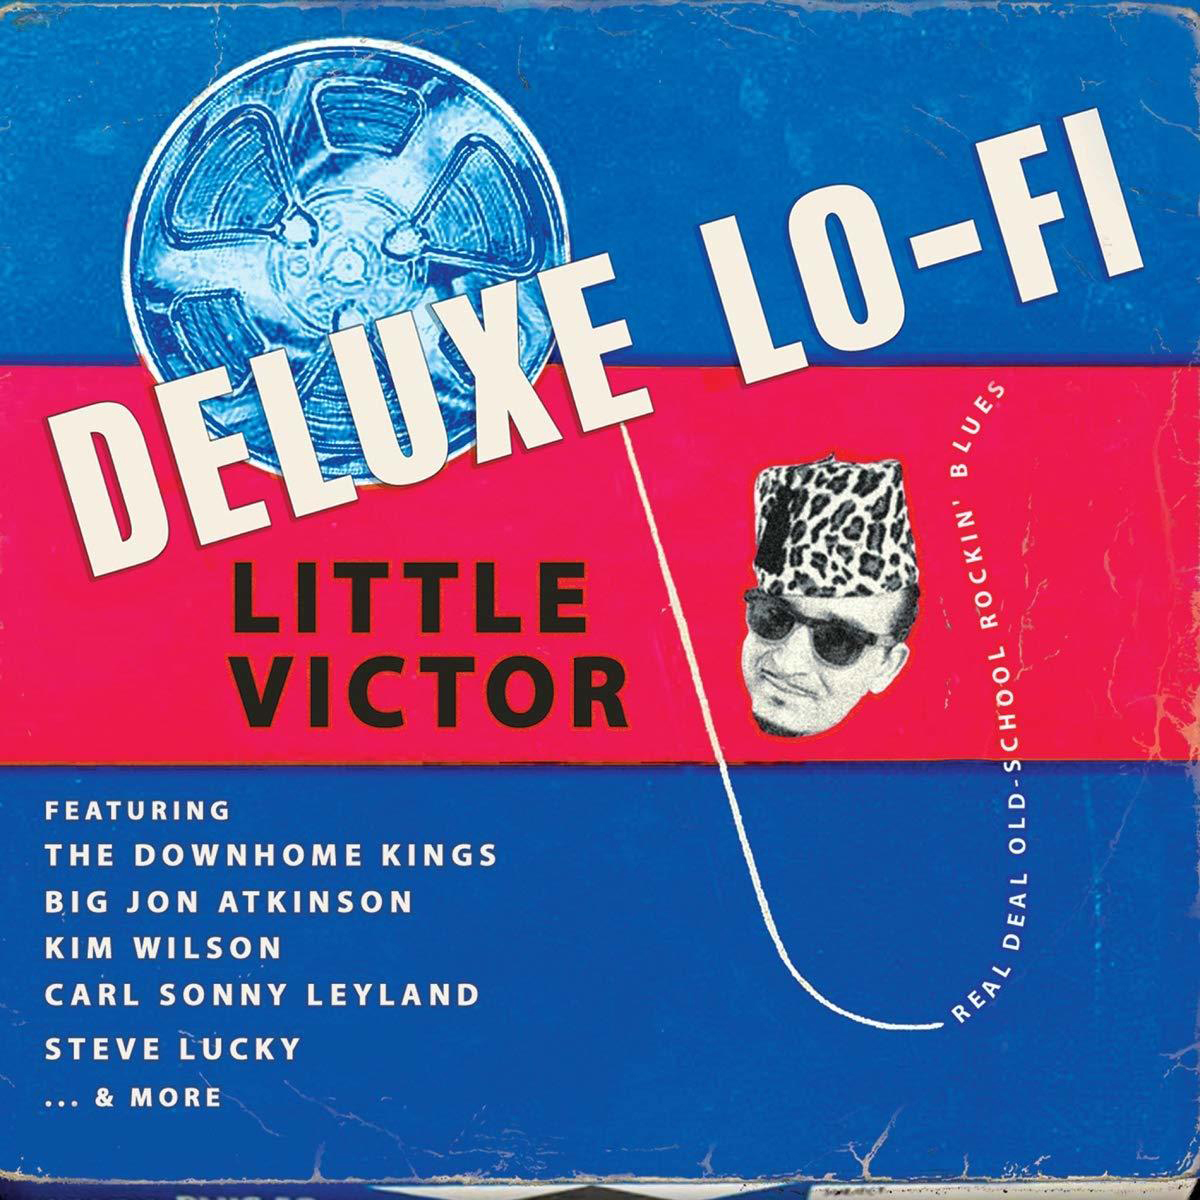 - Victor Little (Vinyl) Lo-Fi - Deluxe